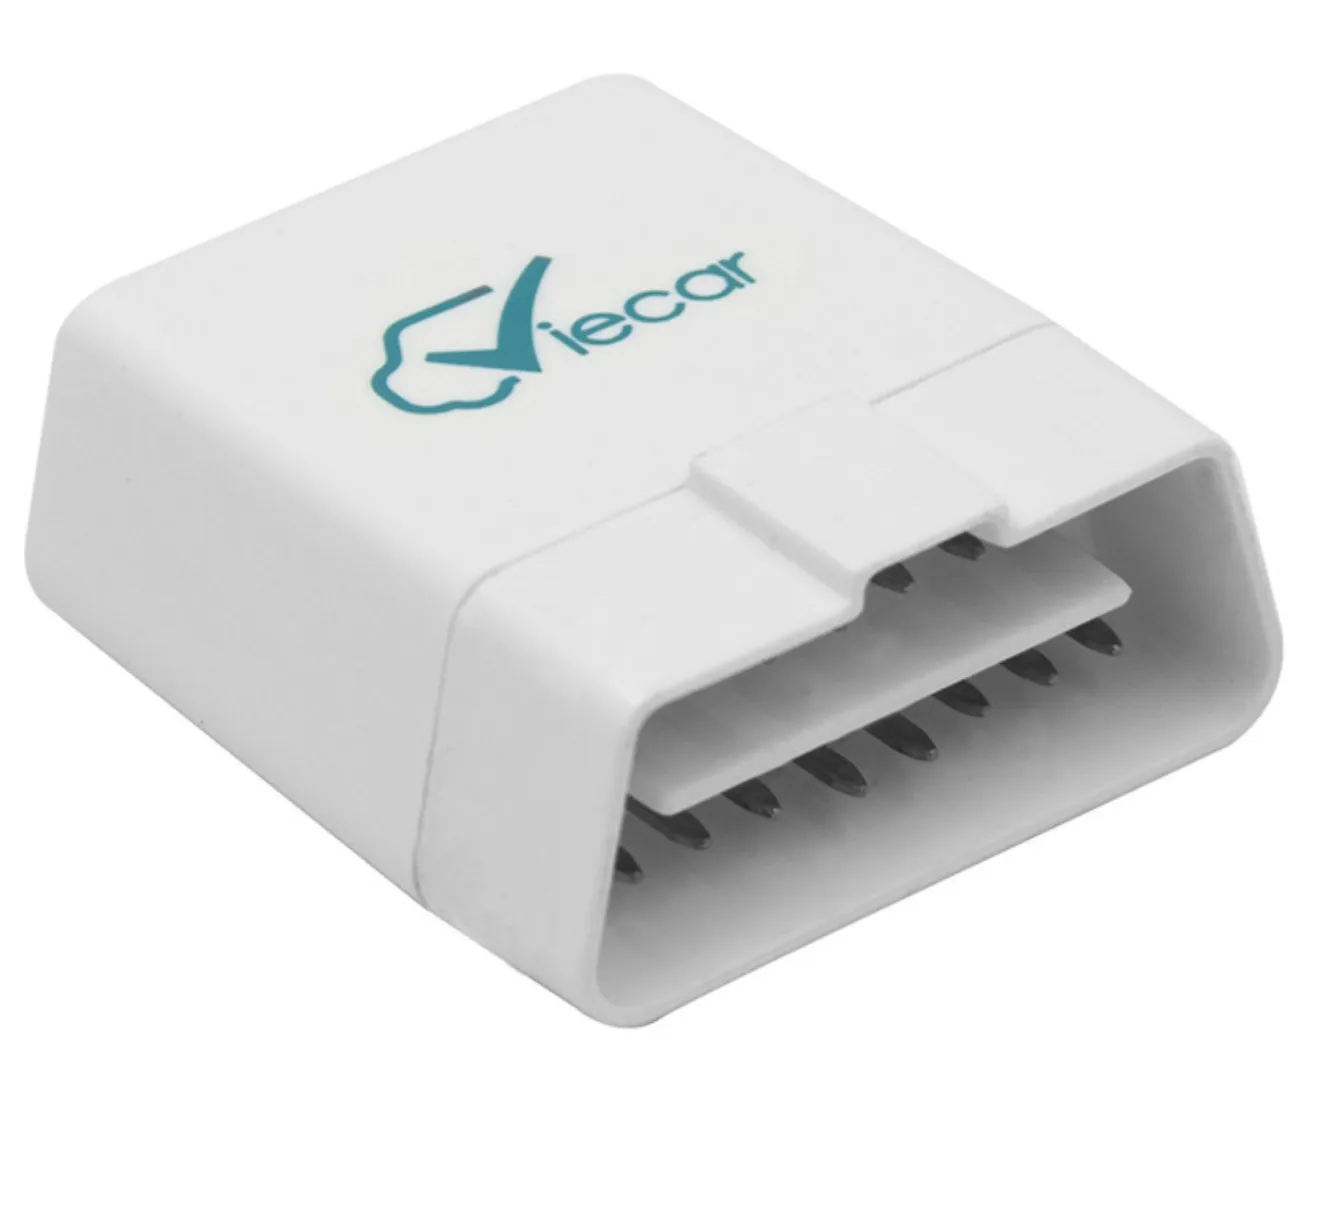 Original Bluetooth 4.0 OBD2 Car Diagnostic Reader Scanner VC100 Narzędzie do nauki diagnostycznej OBD